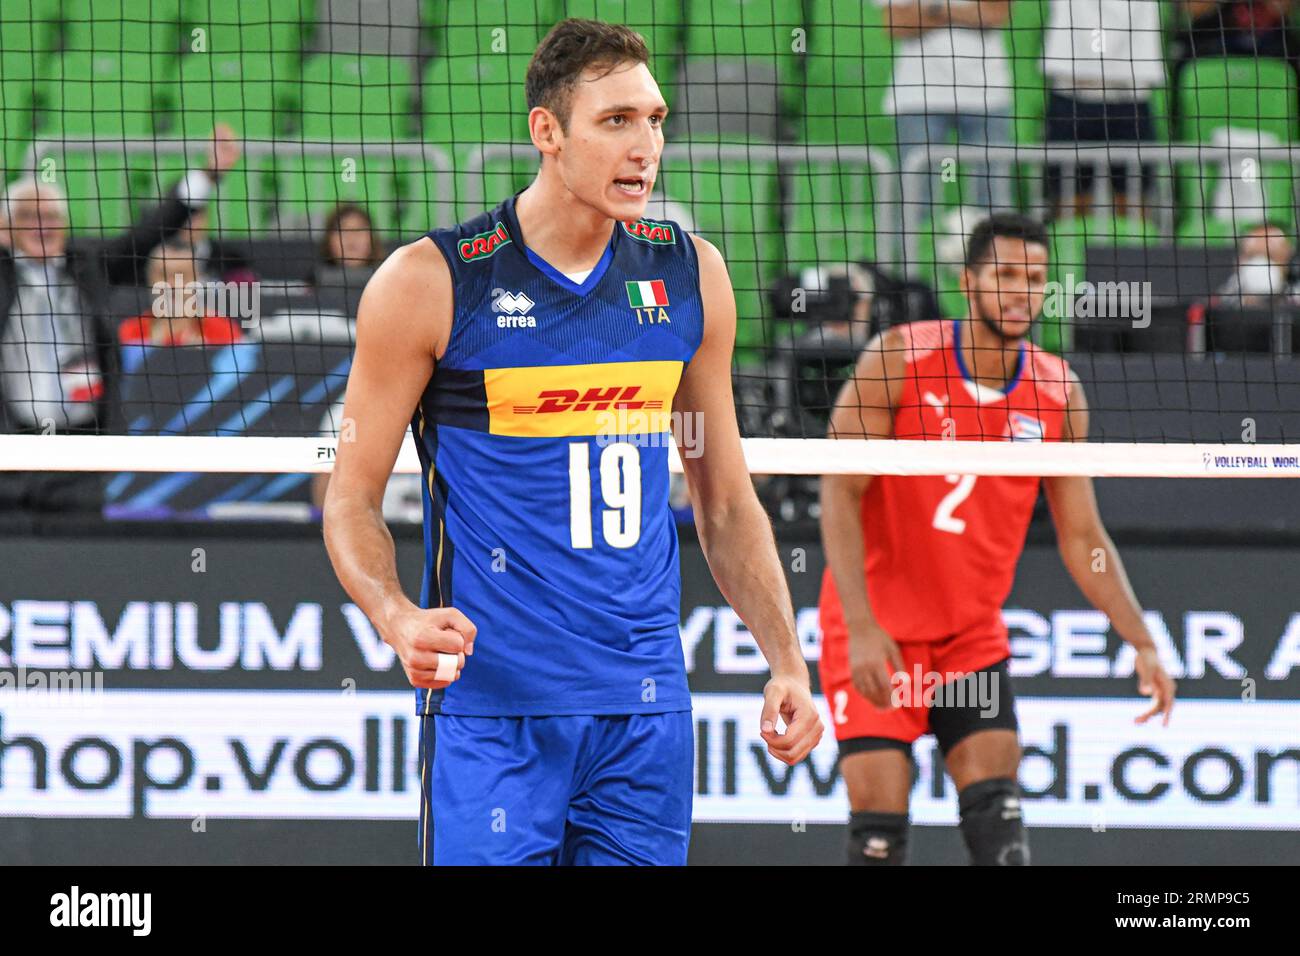 Roberto Russo (Italy), Osniel Melgarejo (Cuba). Volleyball World Championship 2022. Stock Photo